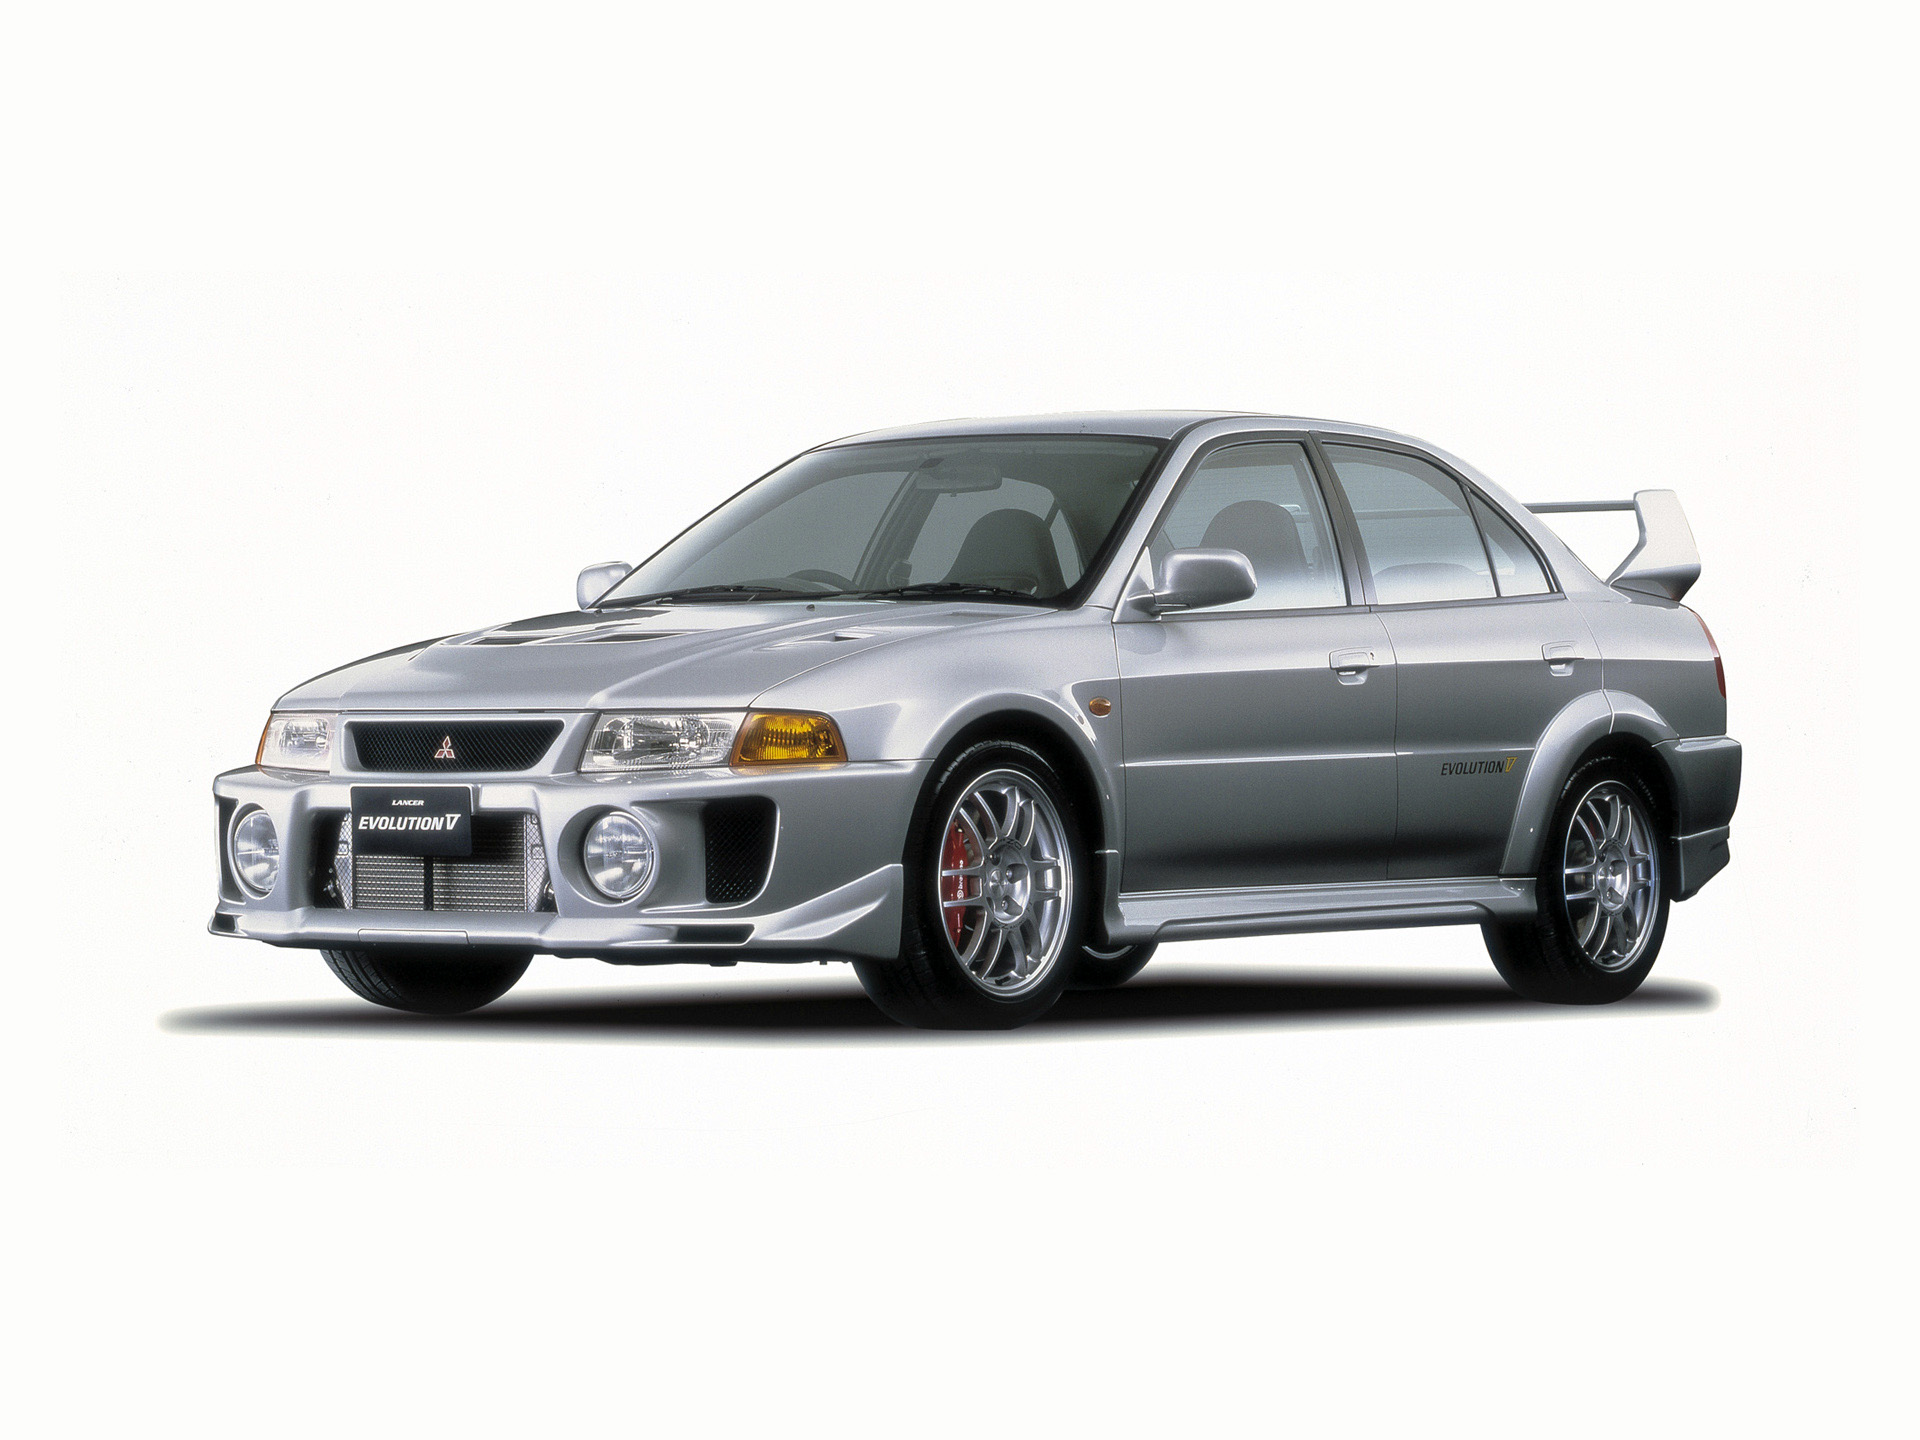  1998 Mitsubishi Lancer GSR Evolution V Wallpaper.